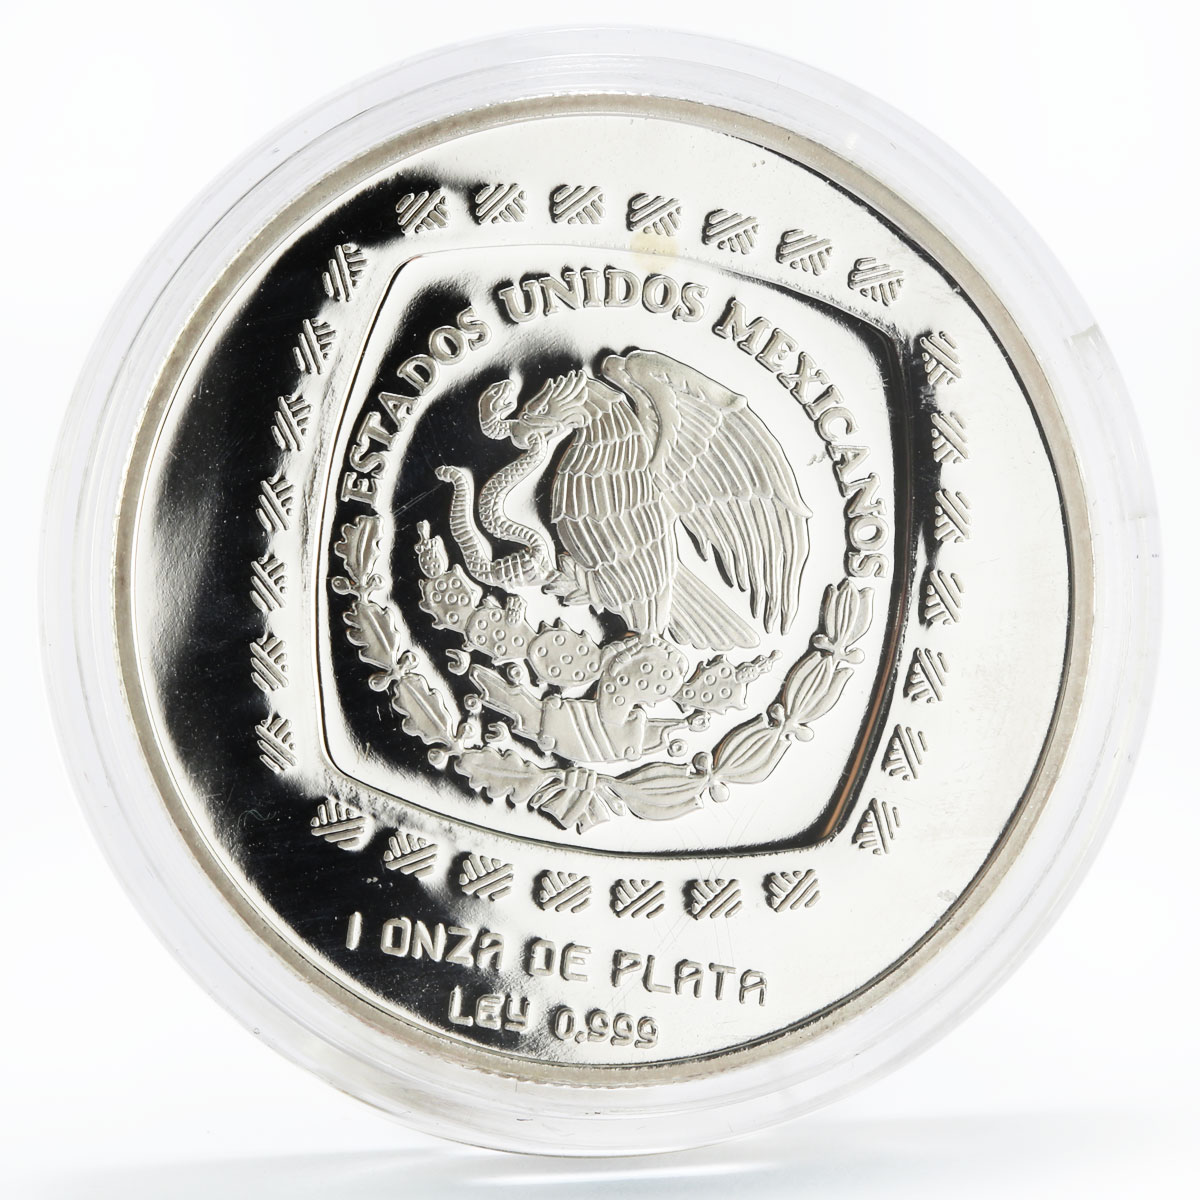 Mexico 5 pesos Precolombina series El Luchador proof silver coin 1996